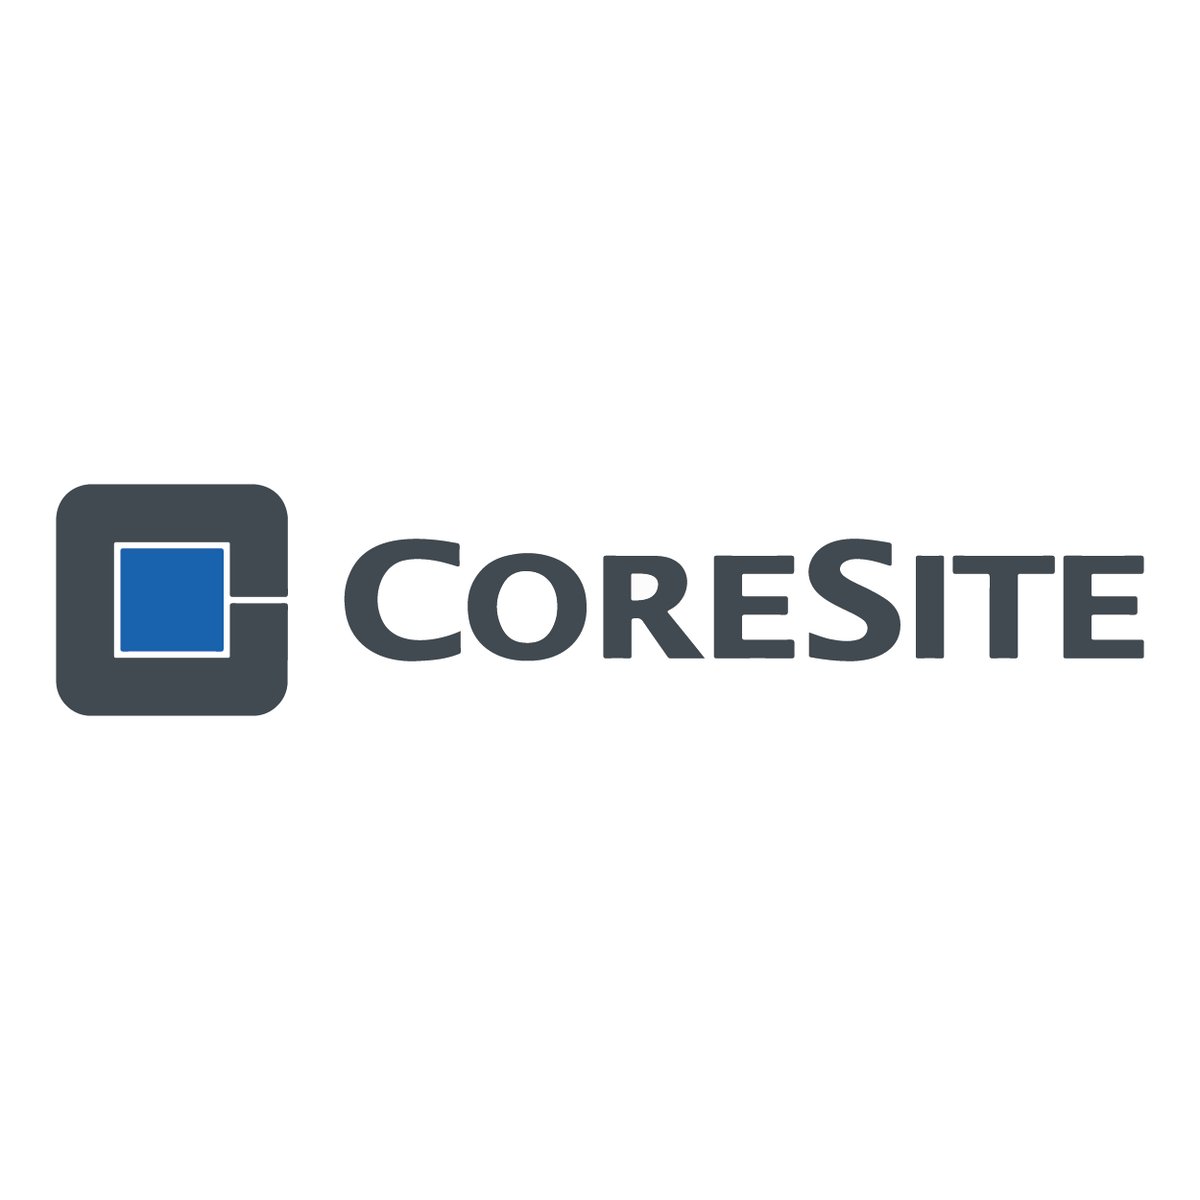 Coresite_Gold-01-1